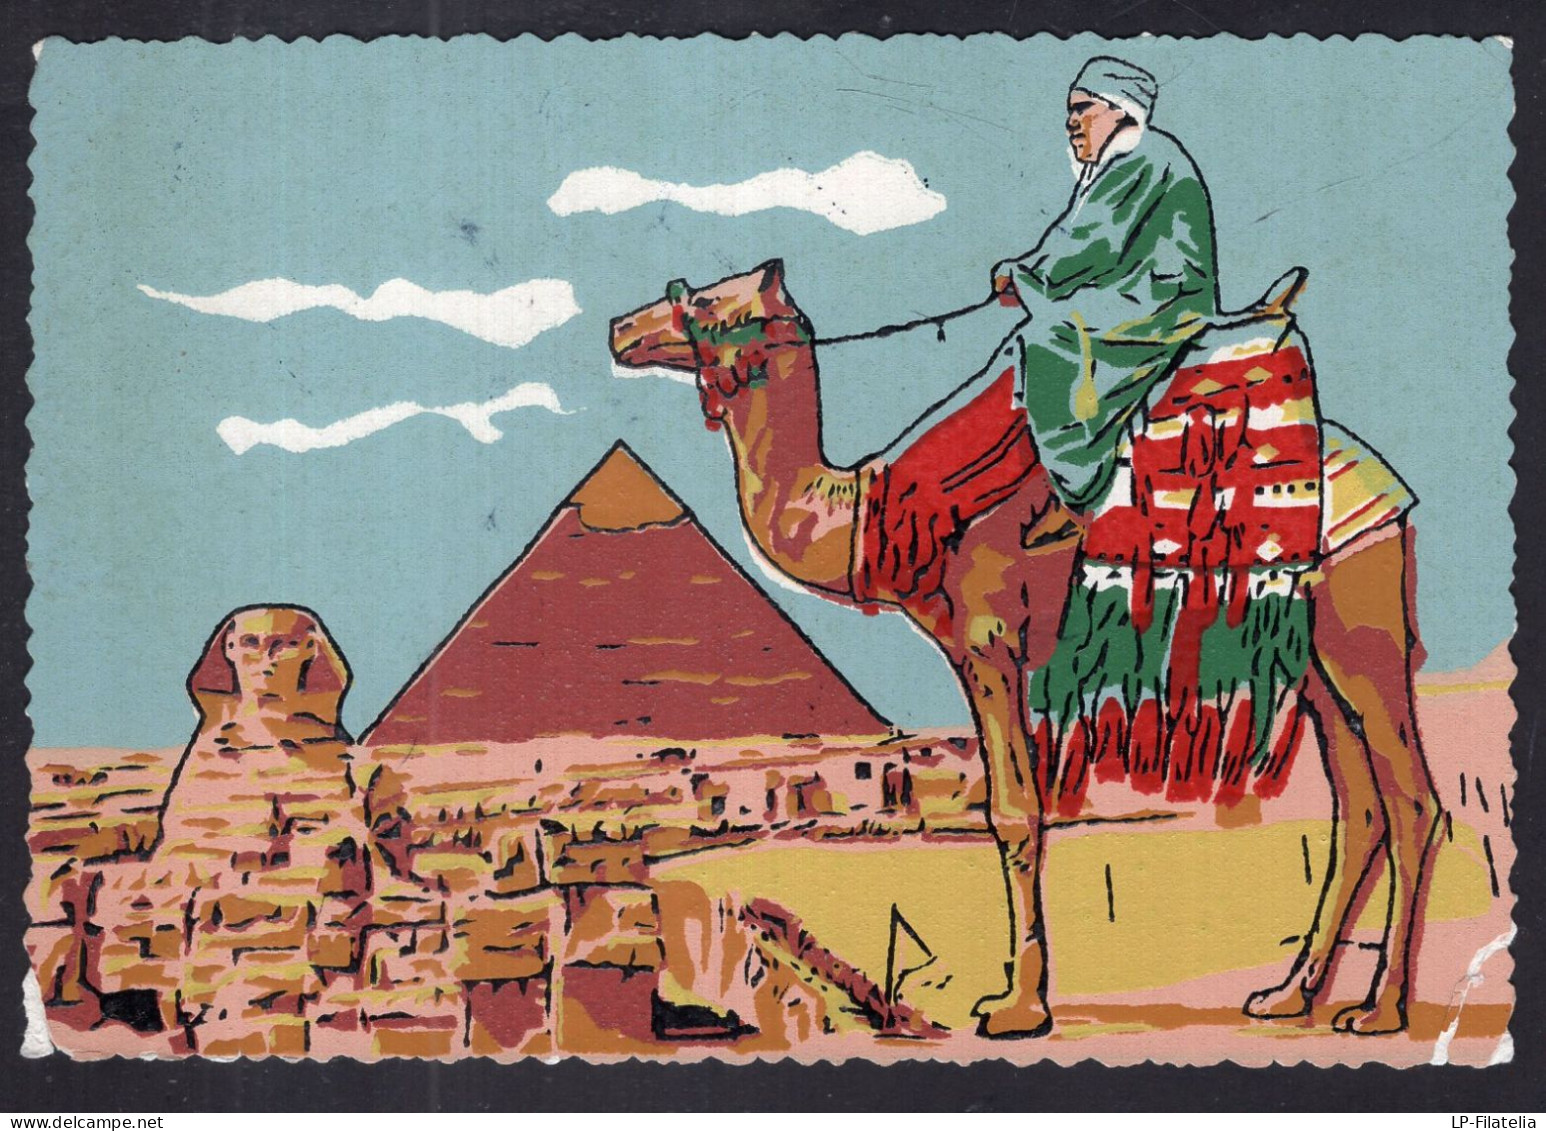 Egypt - Camel - Sphinx - Pyramid - Pyramids